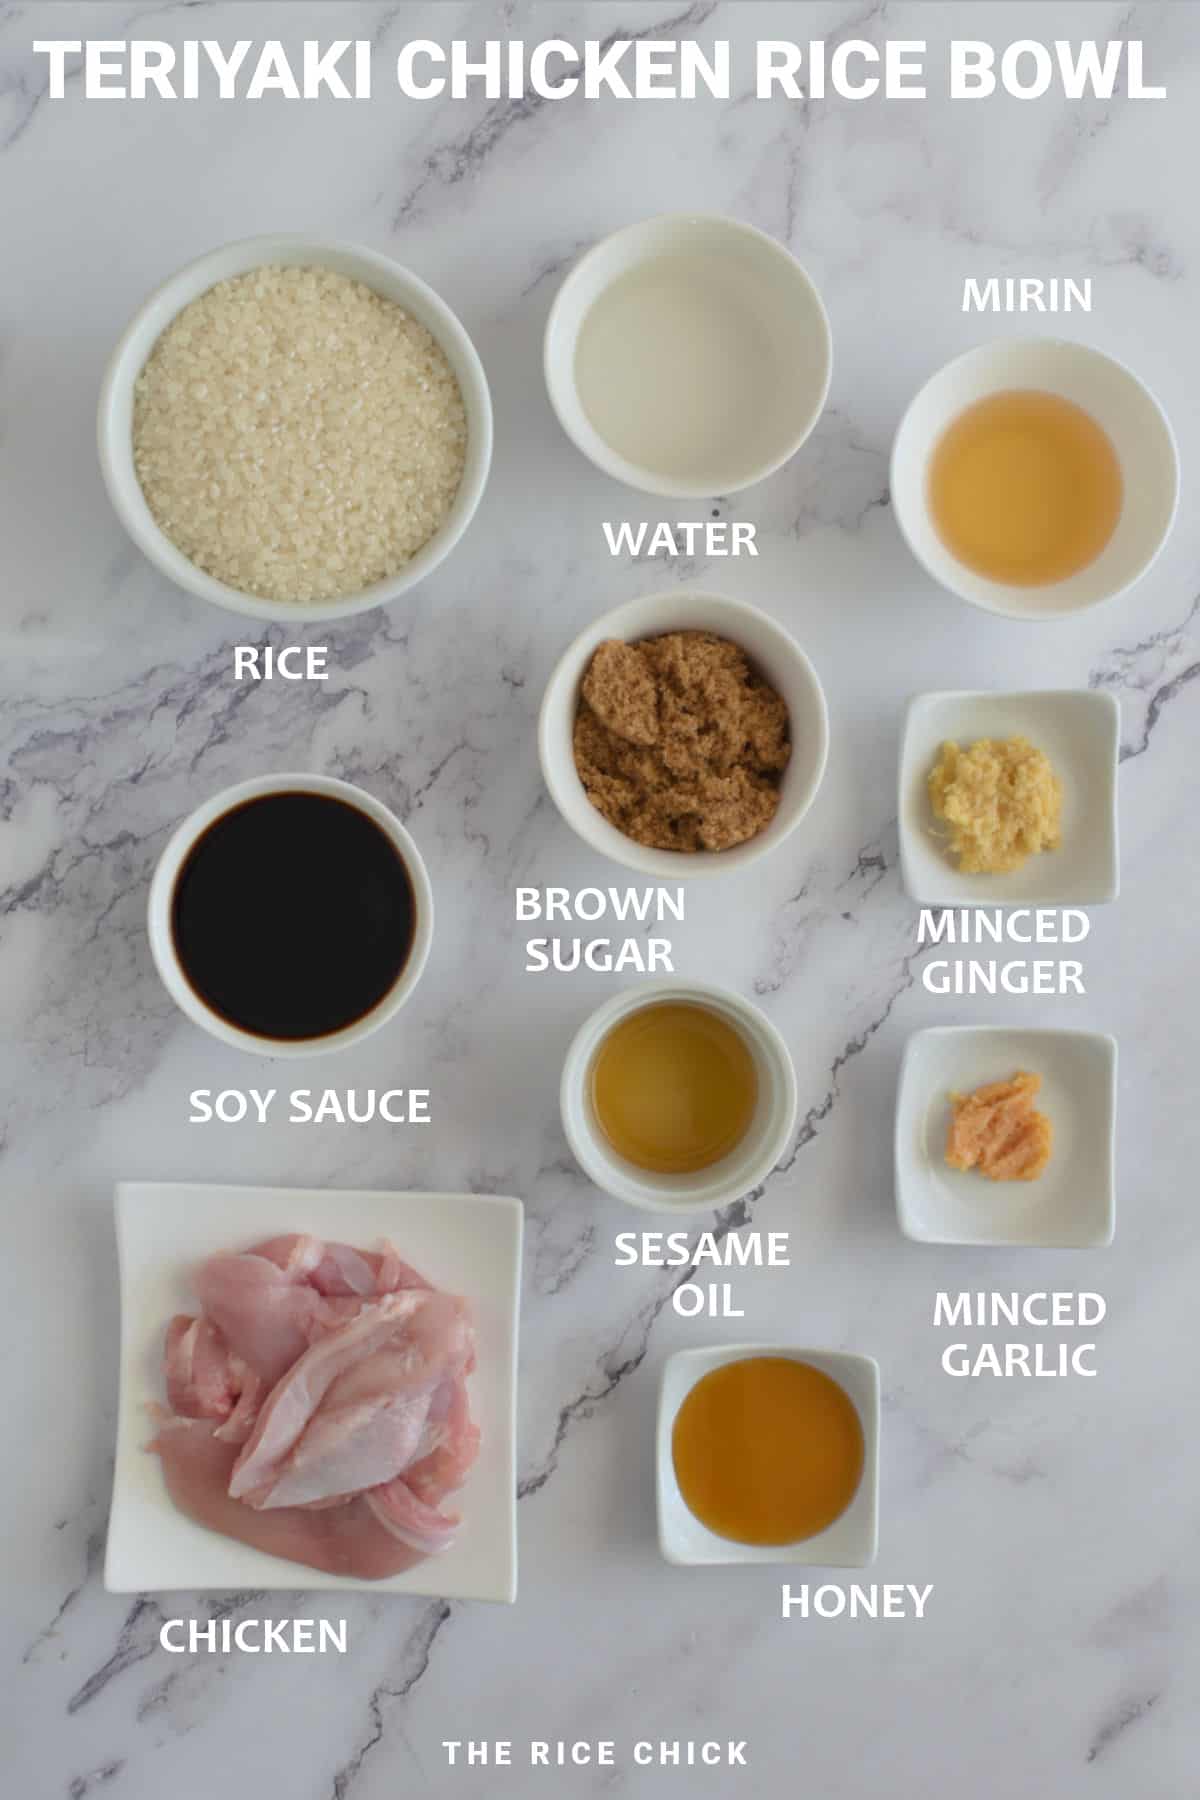 Ingredients for teriyaki chicken rice bowl.